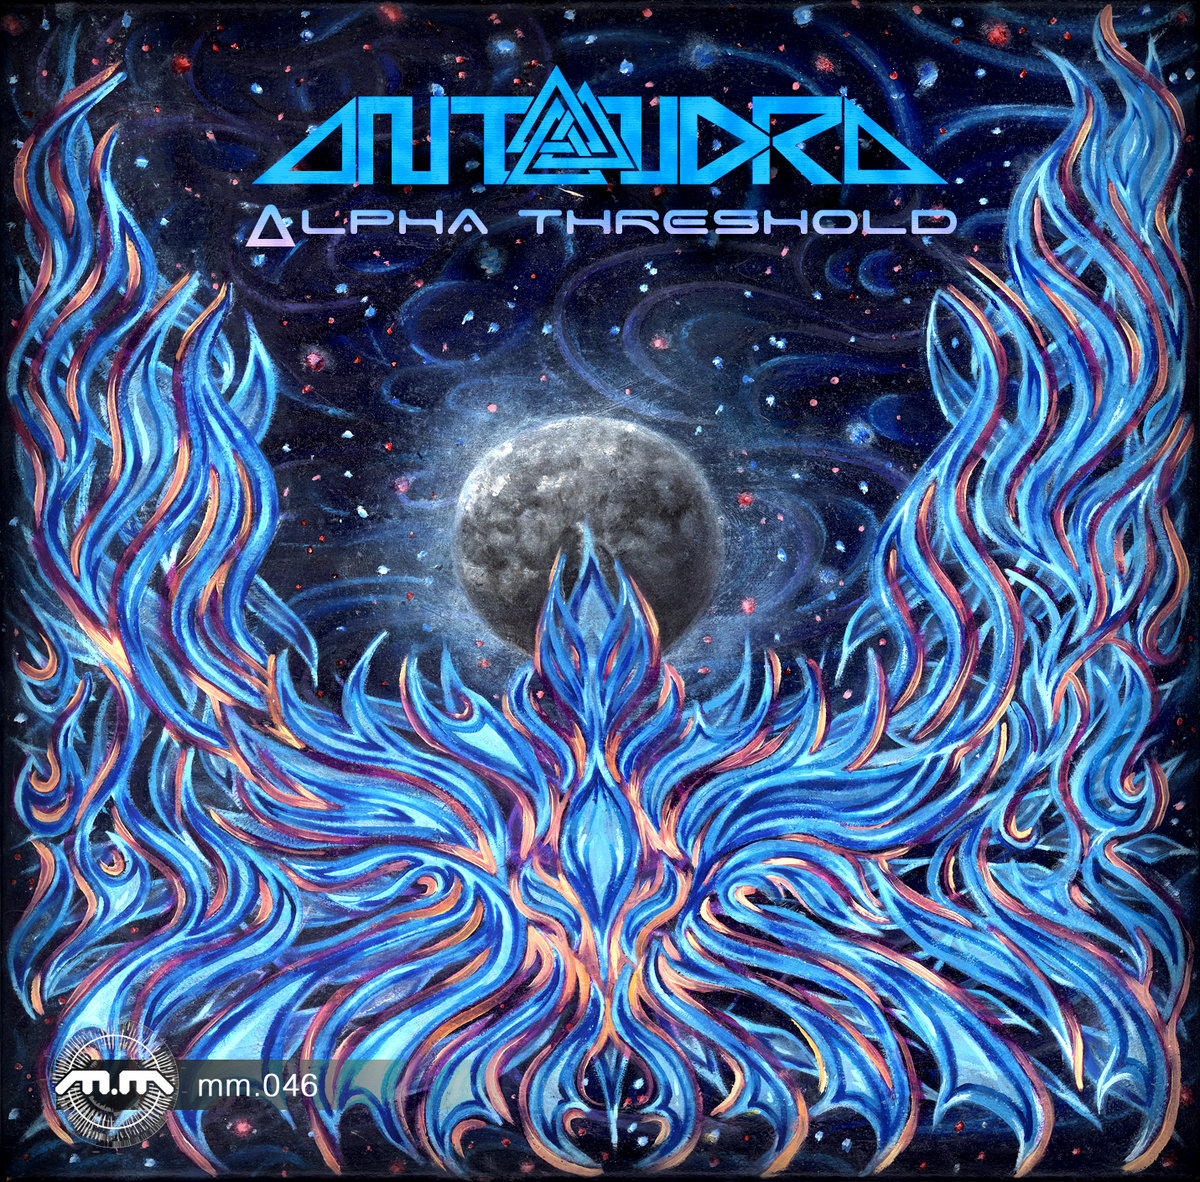 Antandra - Moonlight Flight @ 'Alpha Threshold' album (ambient, downtempo)